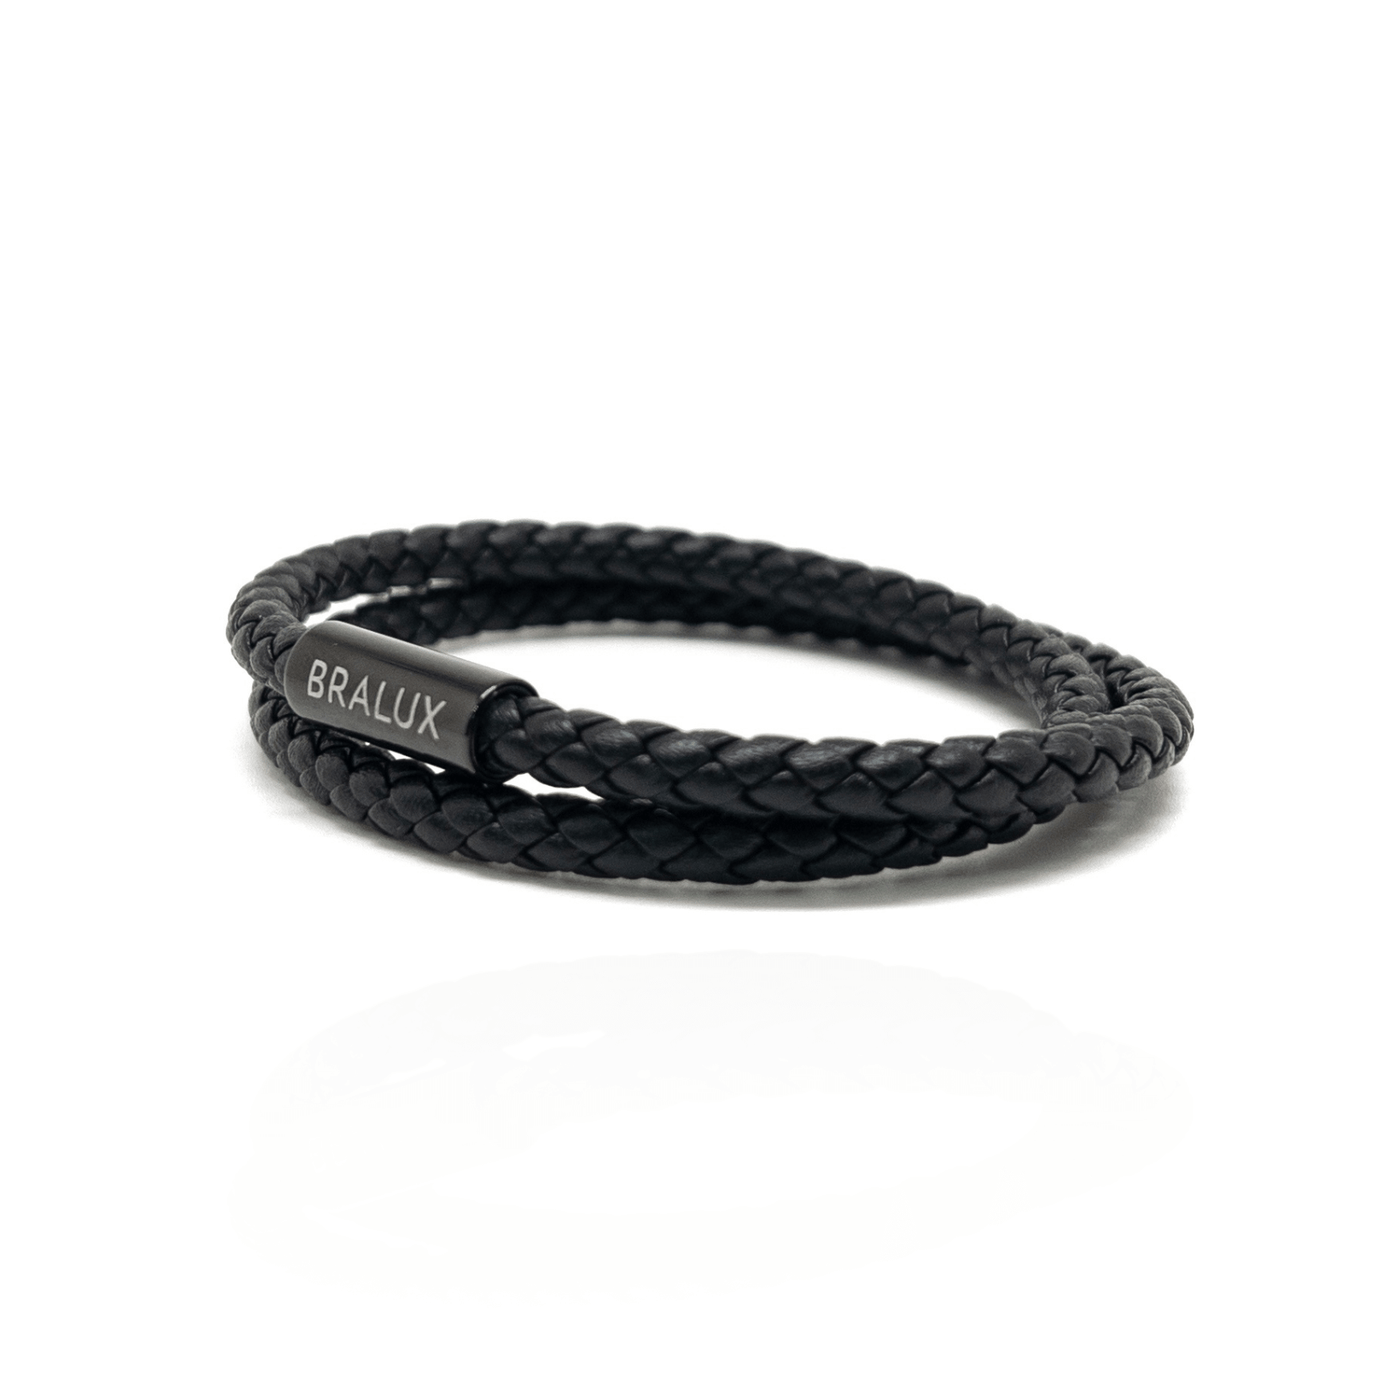 The Full Black Duo Leather Bracelet